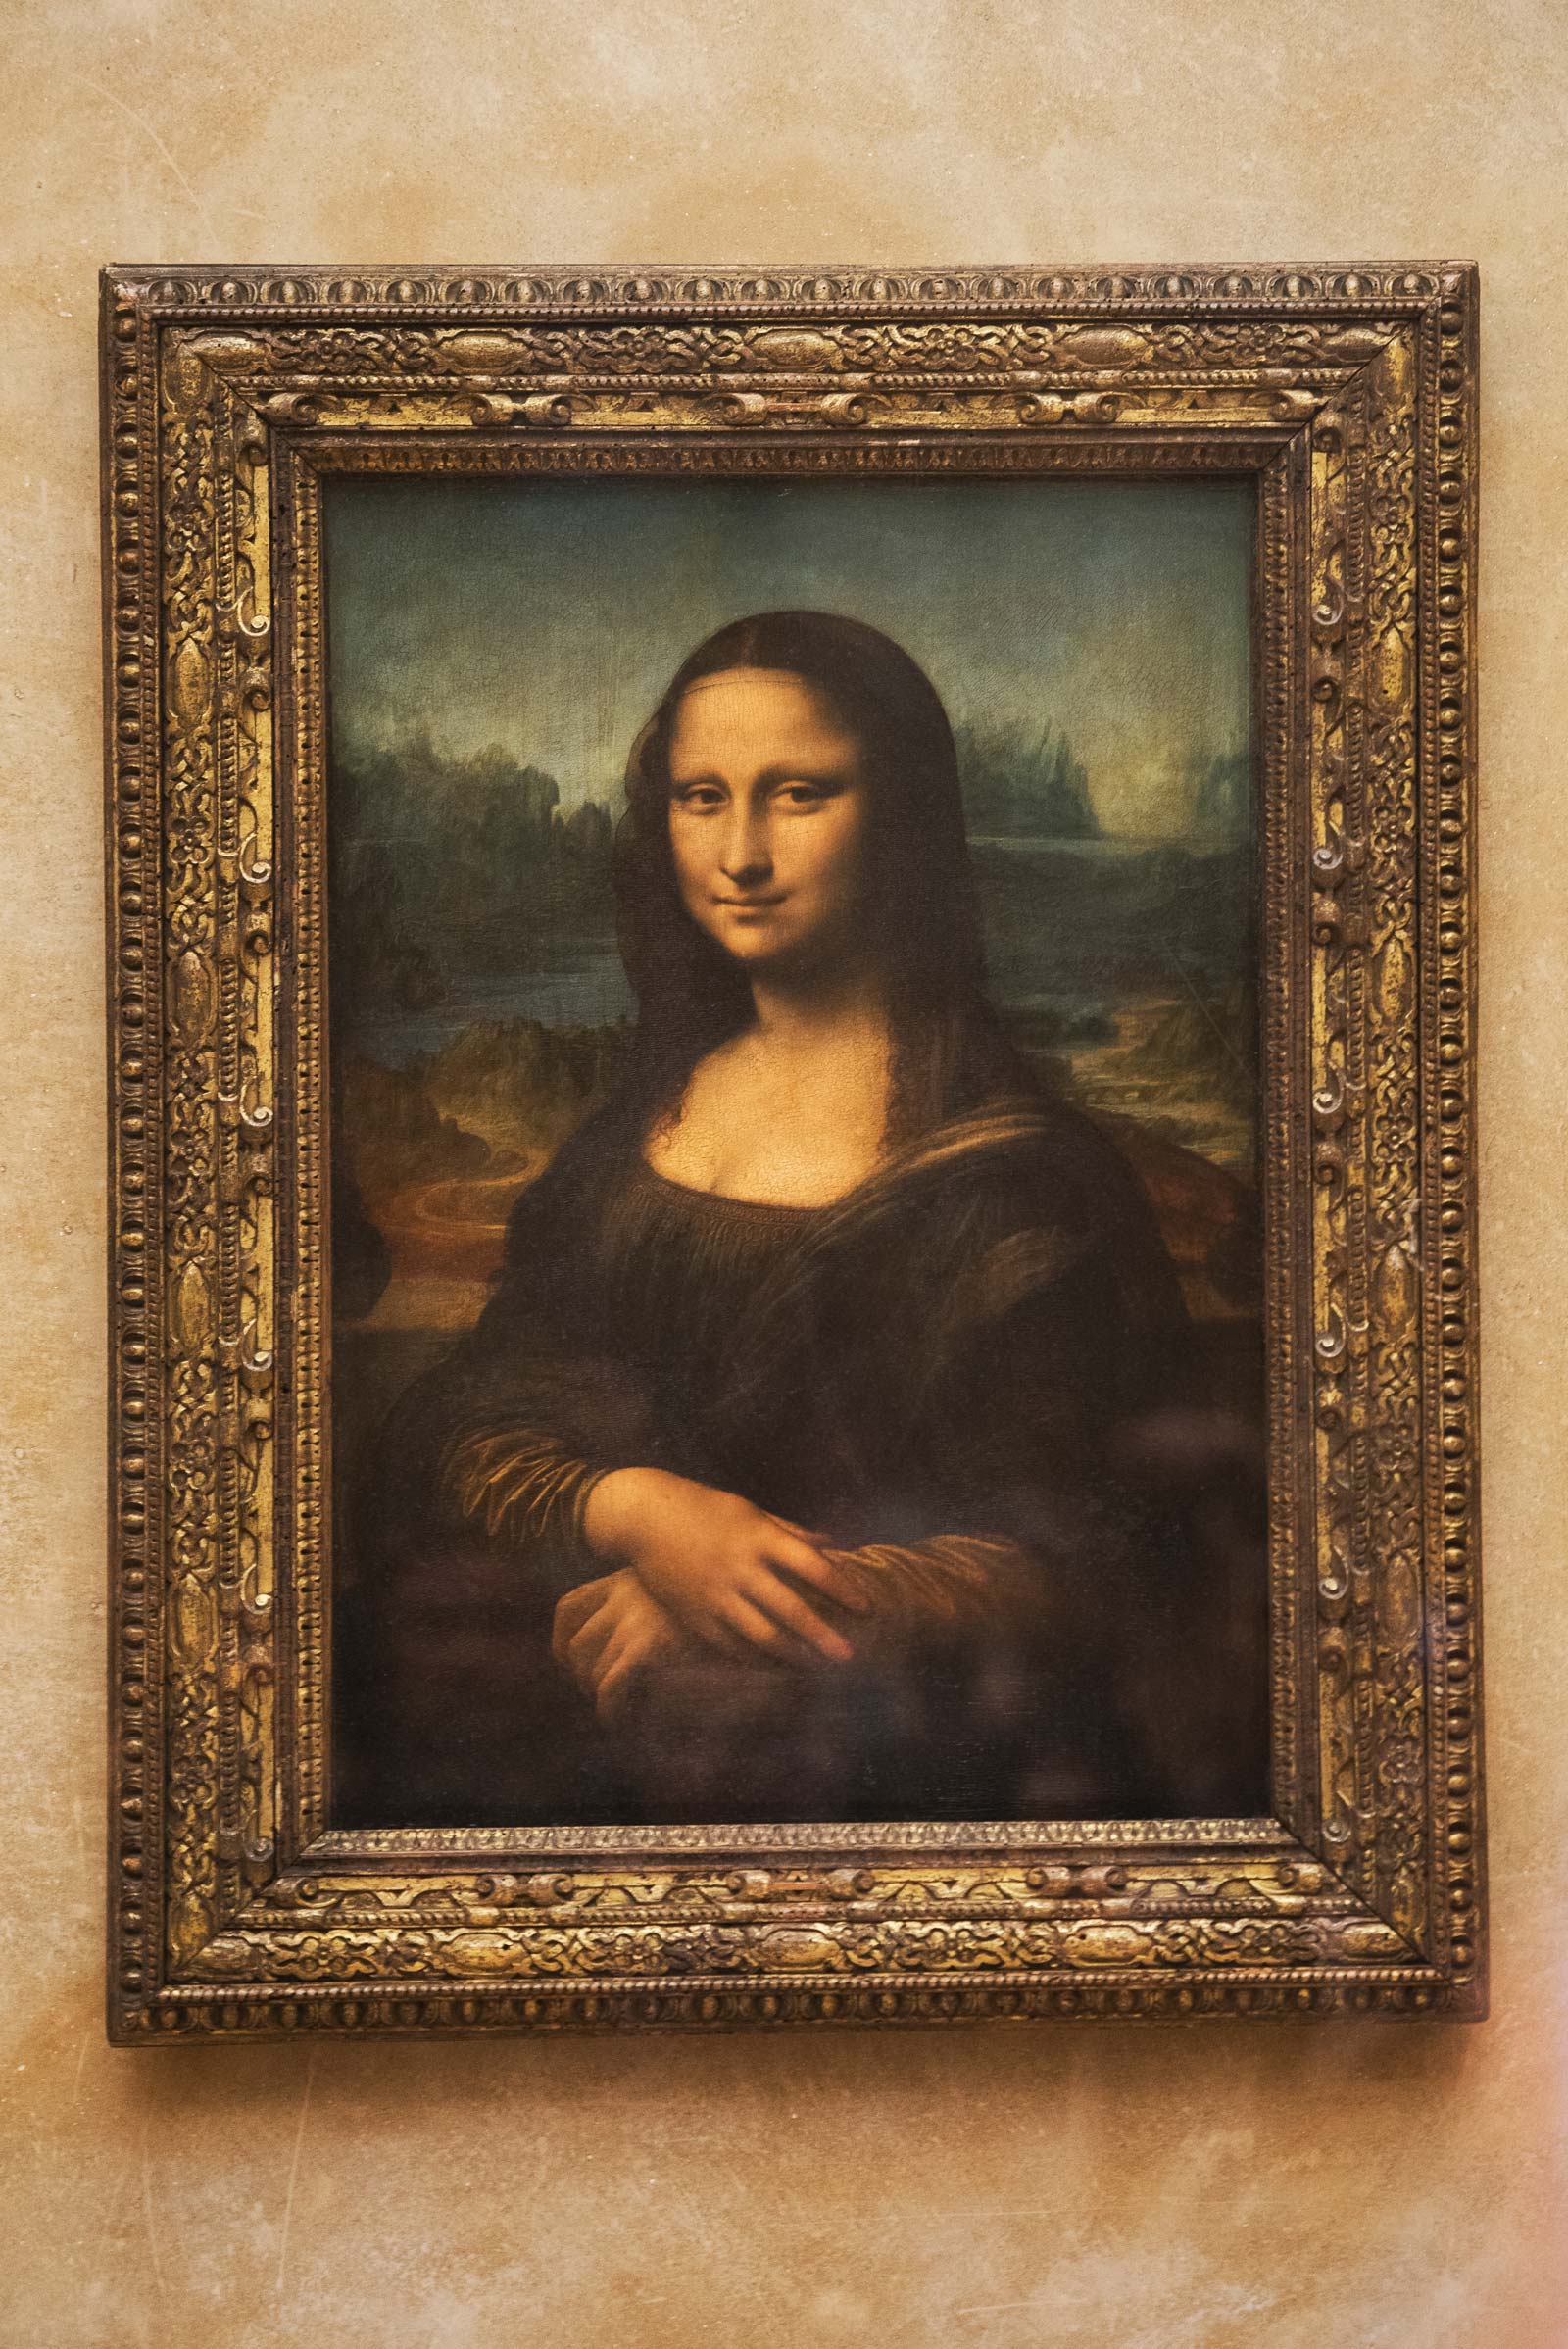 The Mona Lisa by Leonardo da Vinci